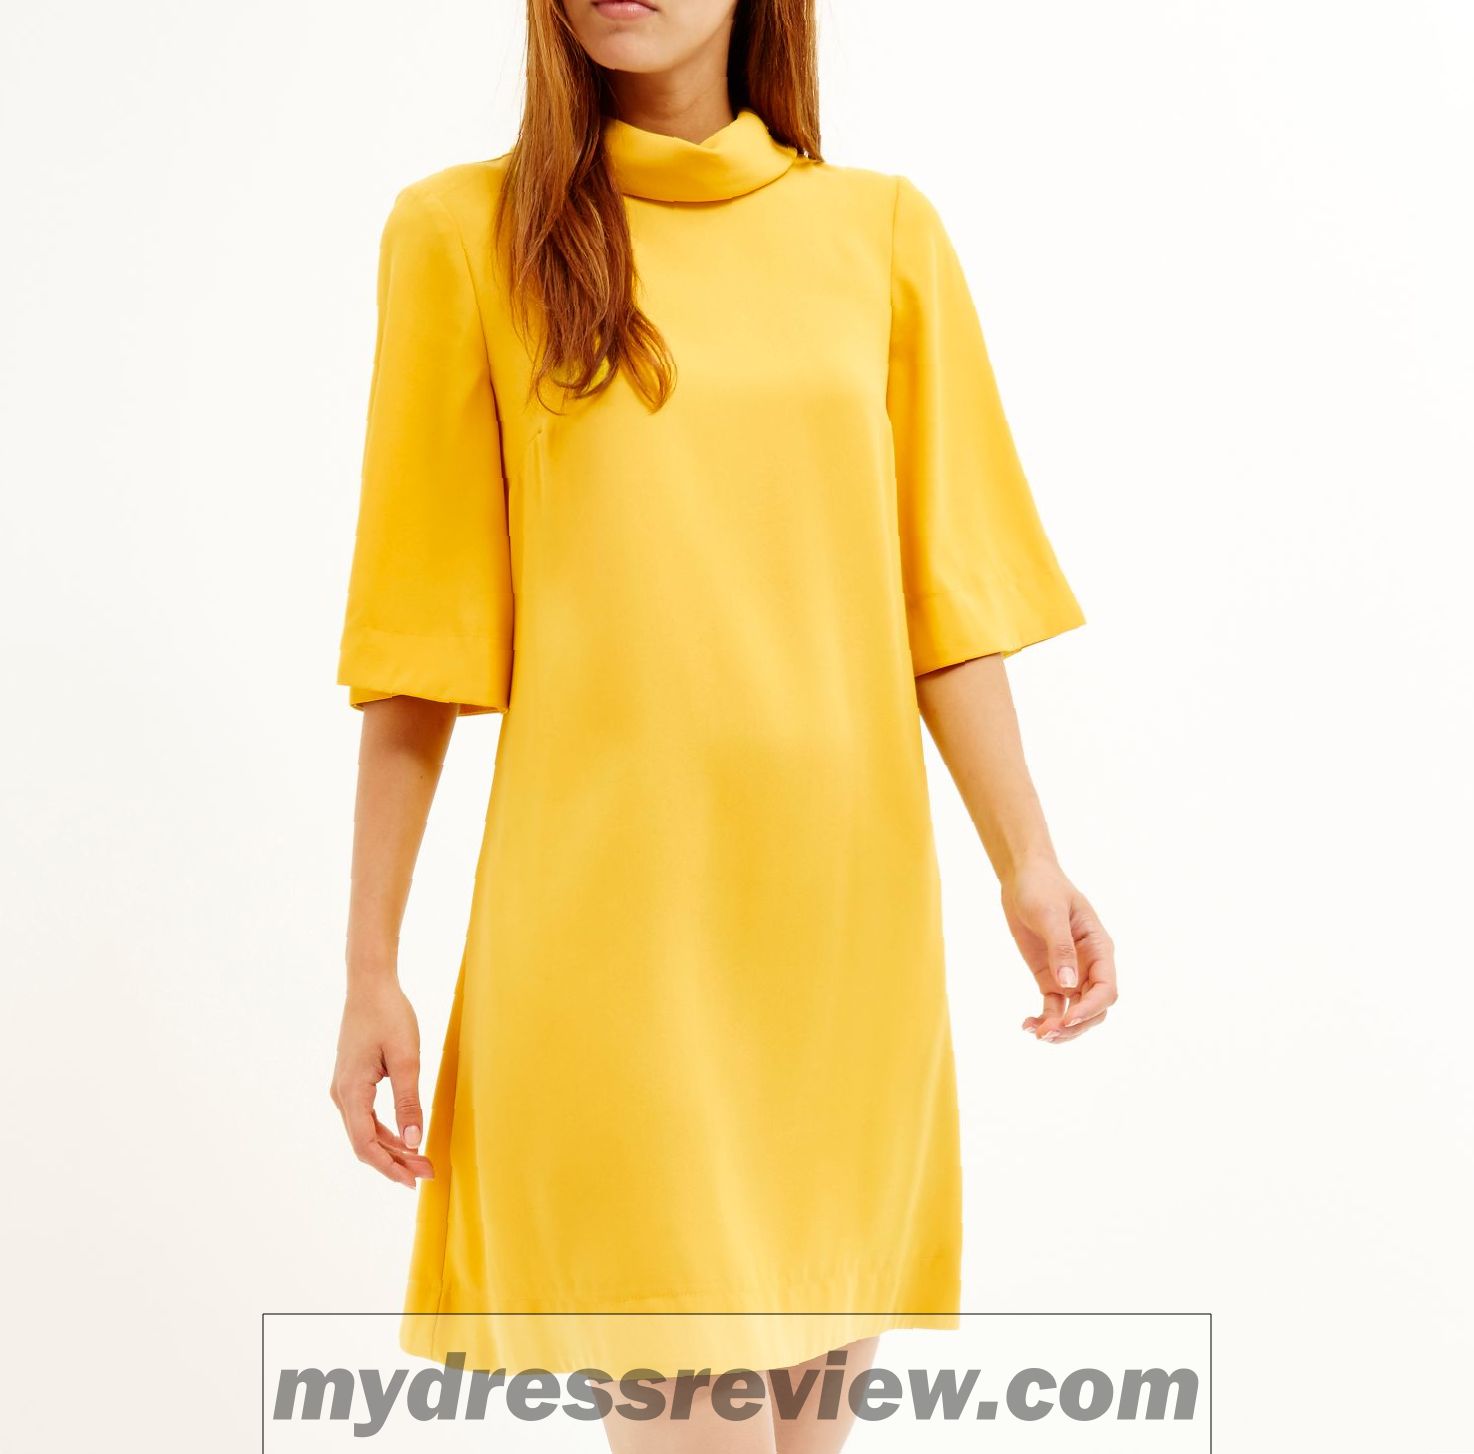 Yellow River Island Dress & Clothing Brand Reviews